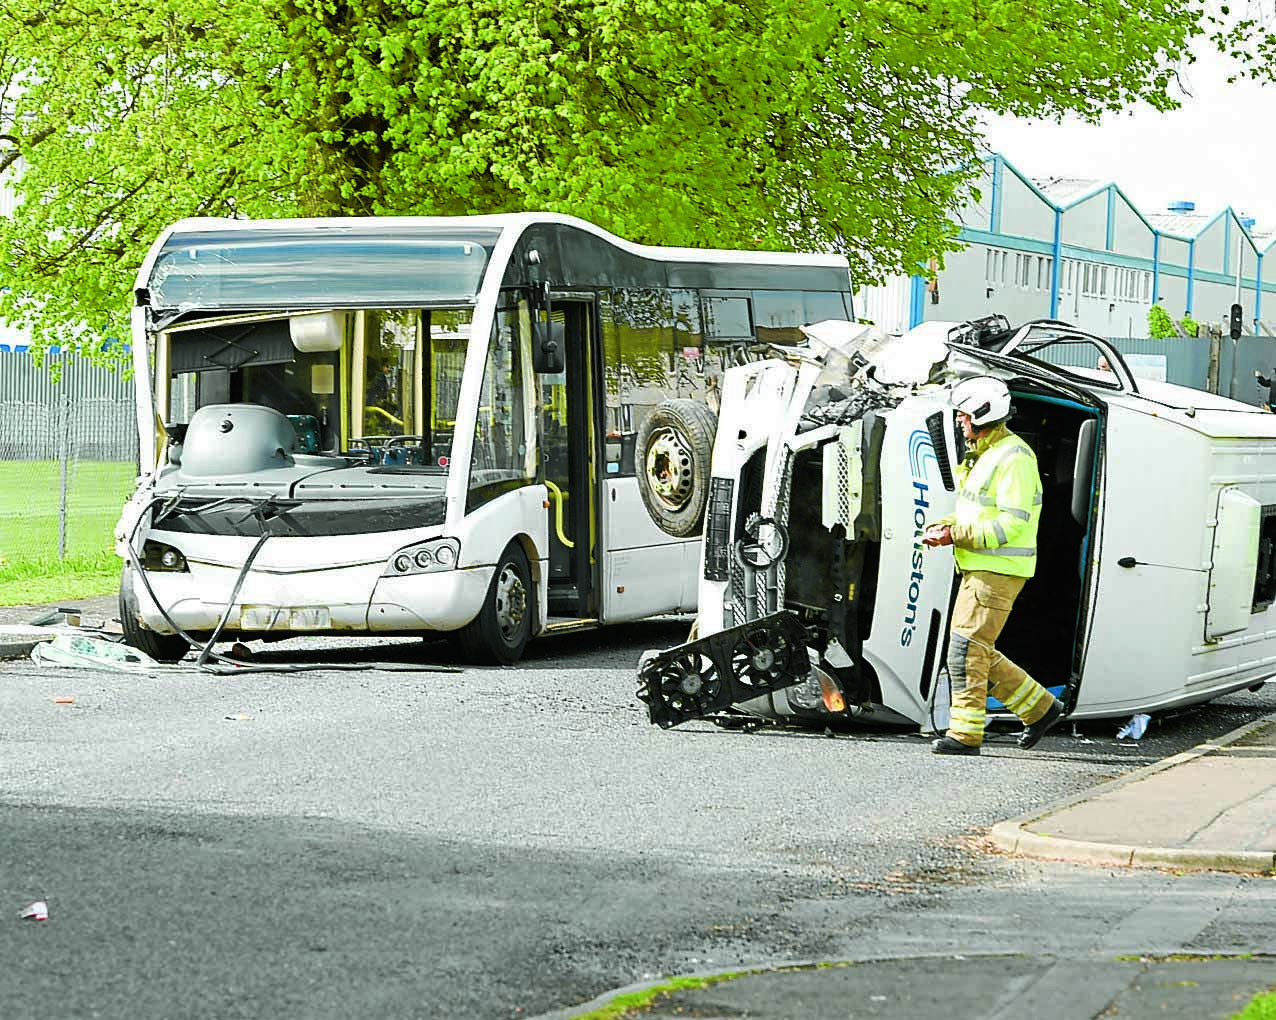 Drivers hurt in buses crash